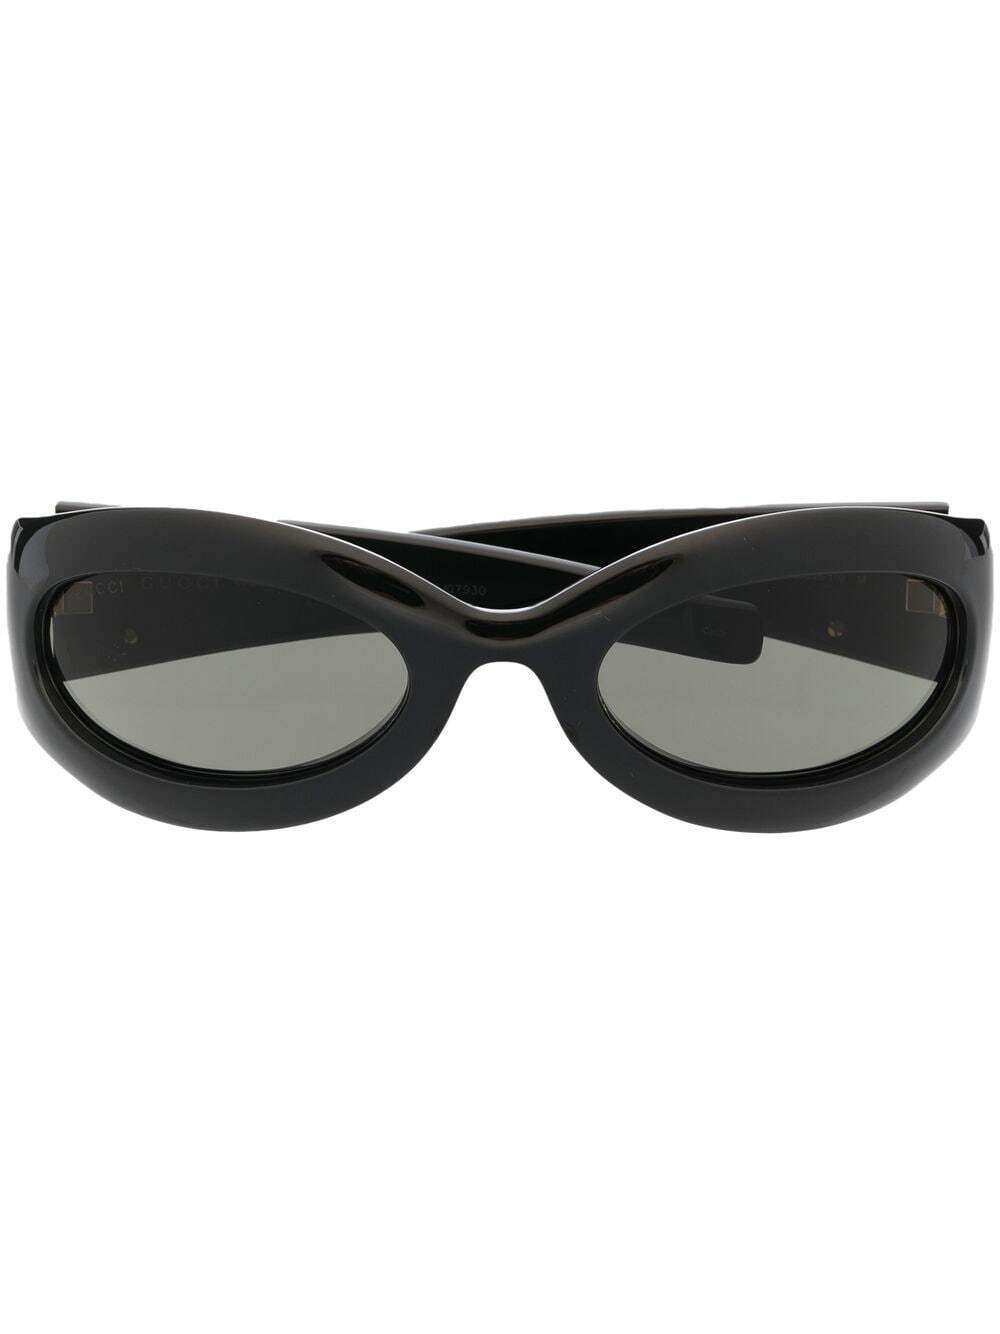 GUCCI EYEWEAR logo square tinted sunglasses - Black